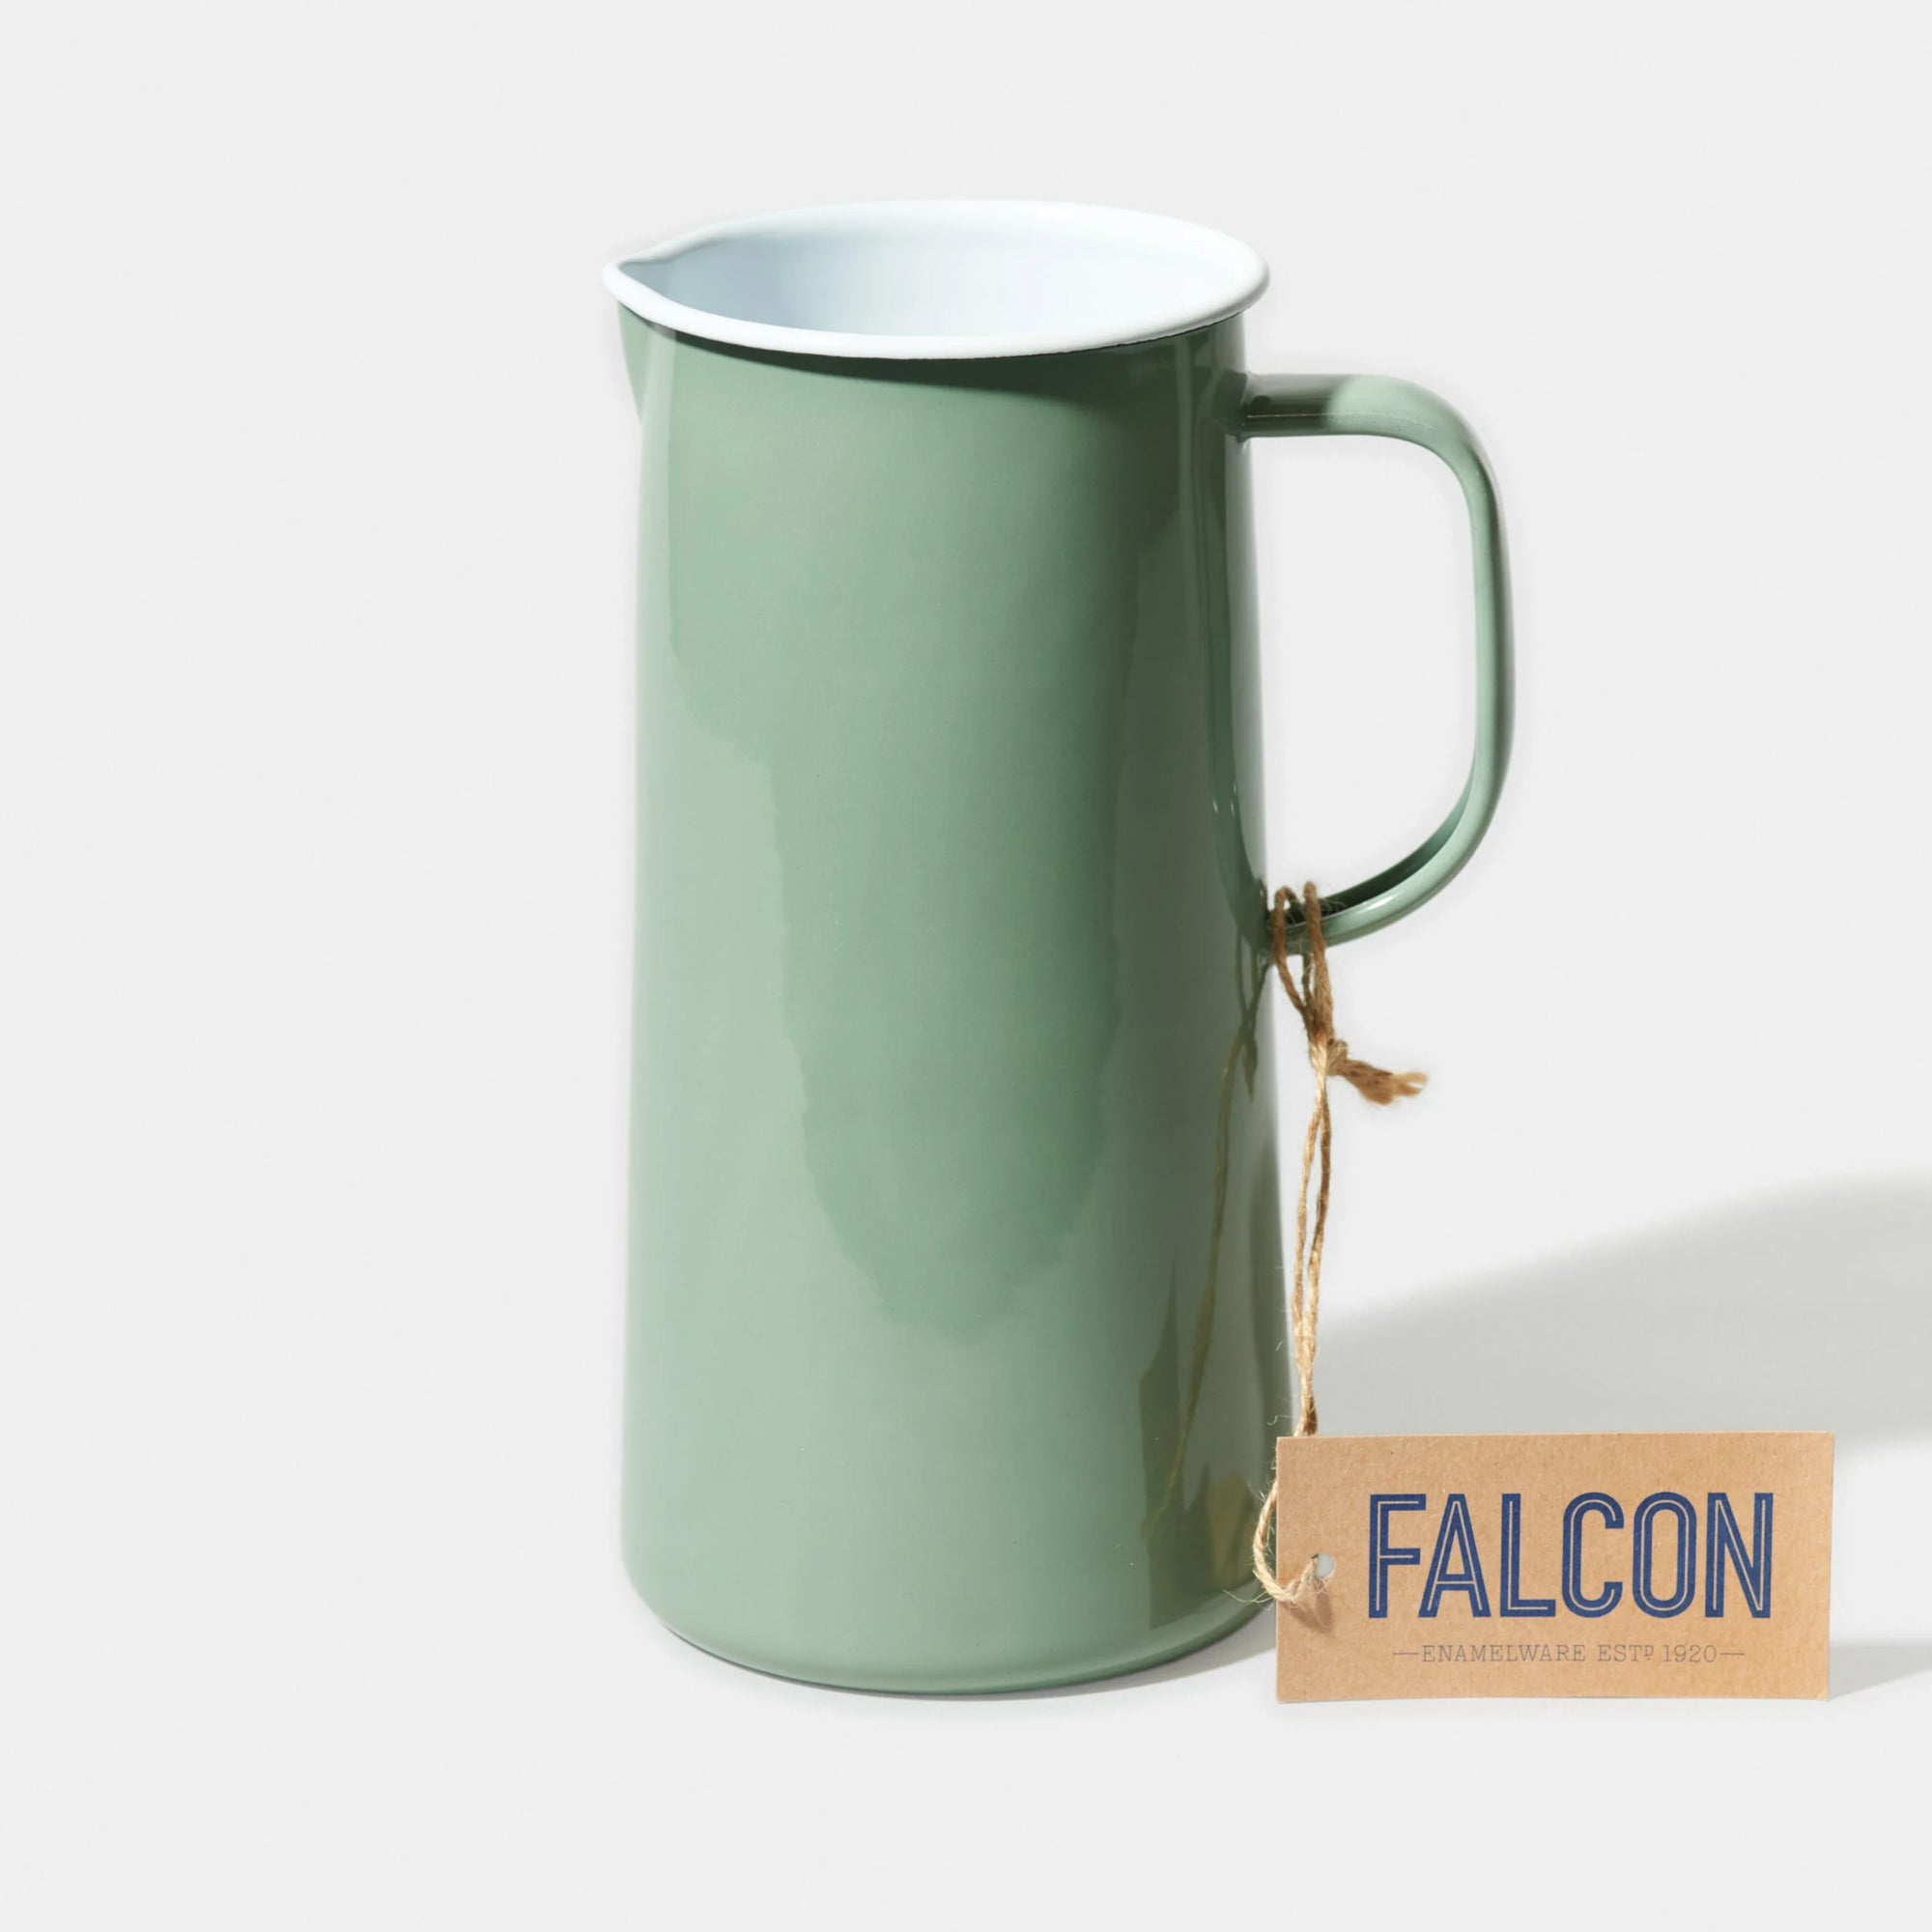 Falcon Enamel 3-pint Jug / Vase